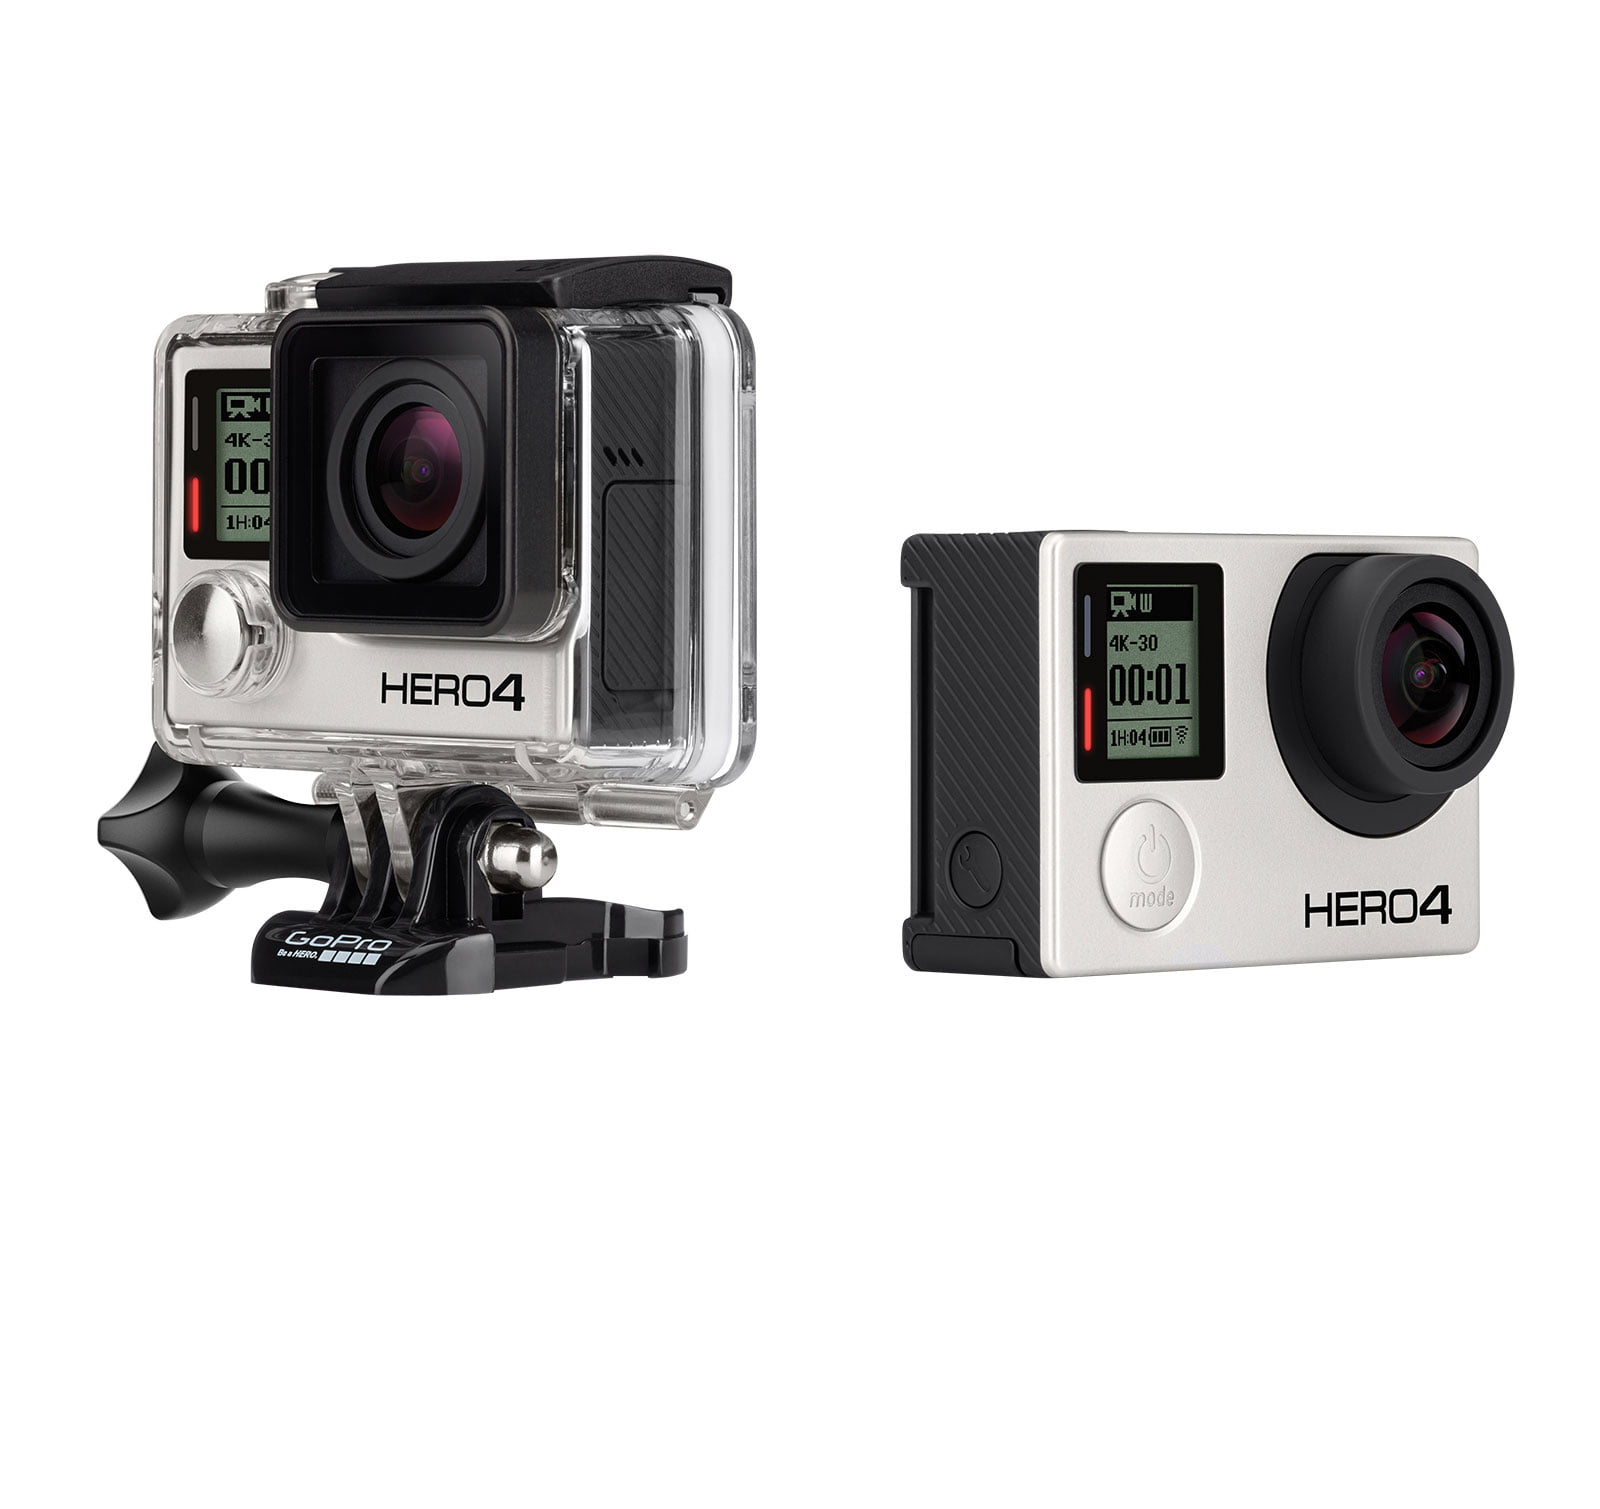 Gopro Chdhx 401 Hero4 Silver And Black 4k Action Camera Walmart Com Walmart Com